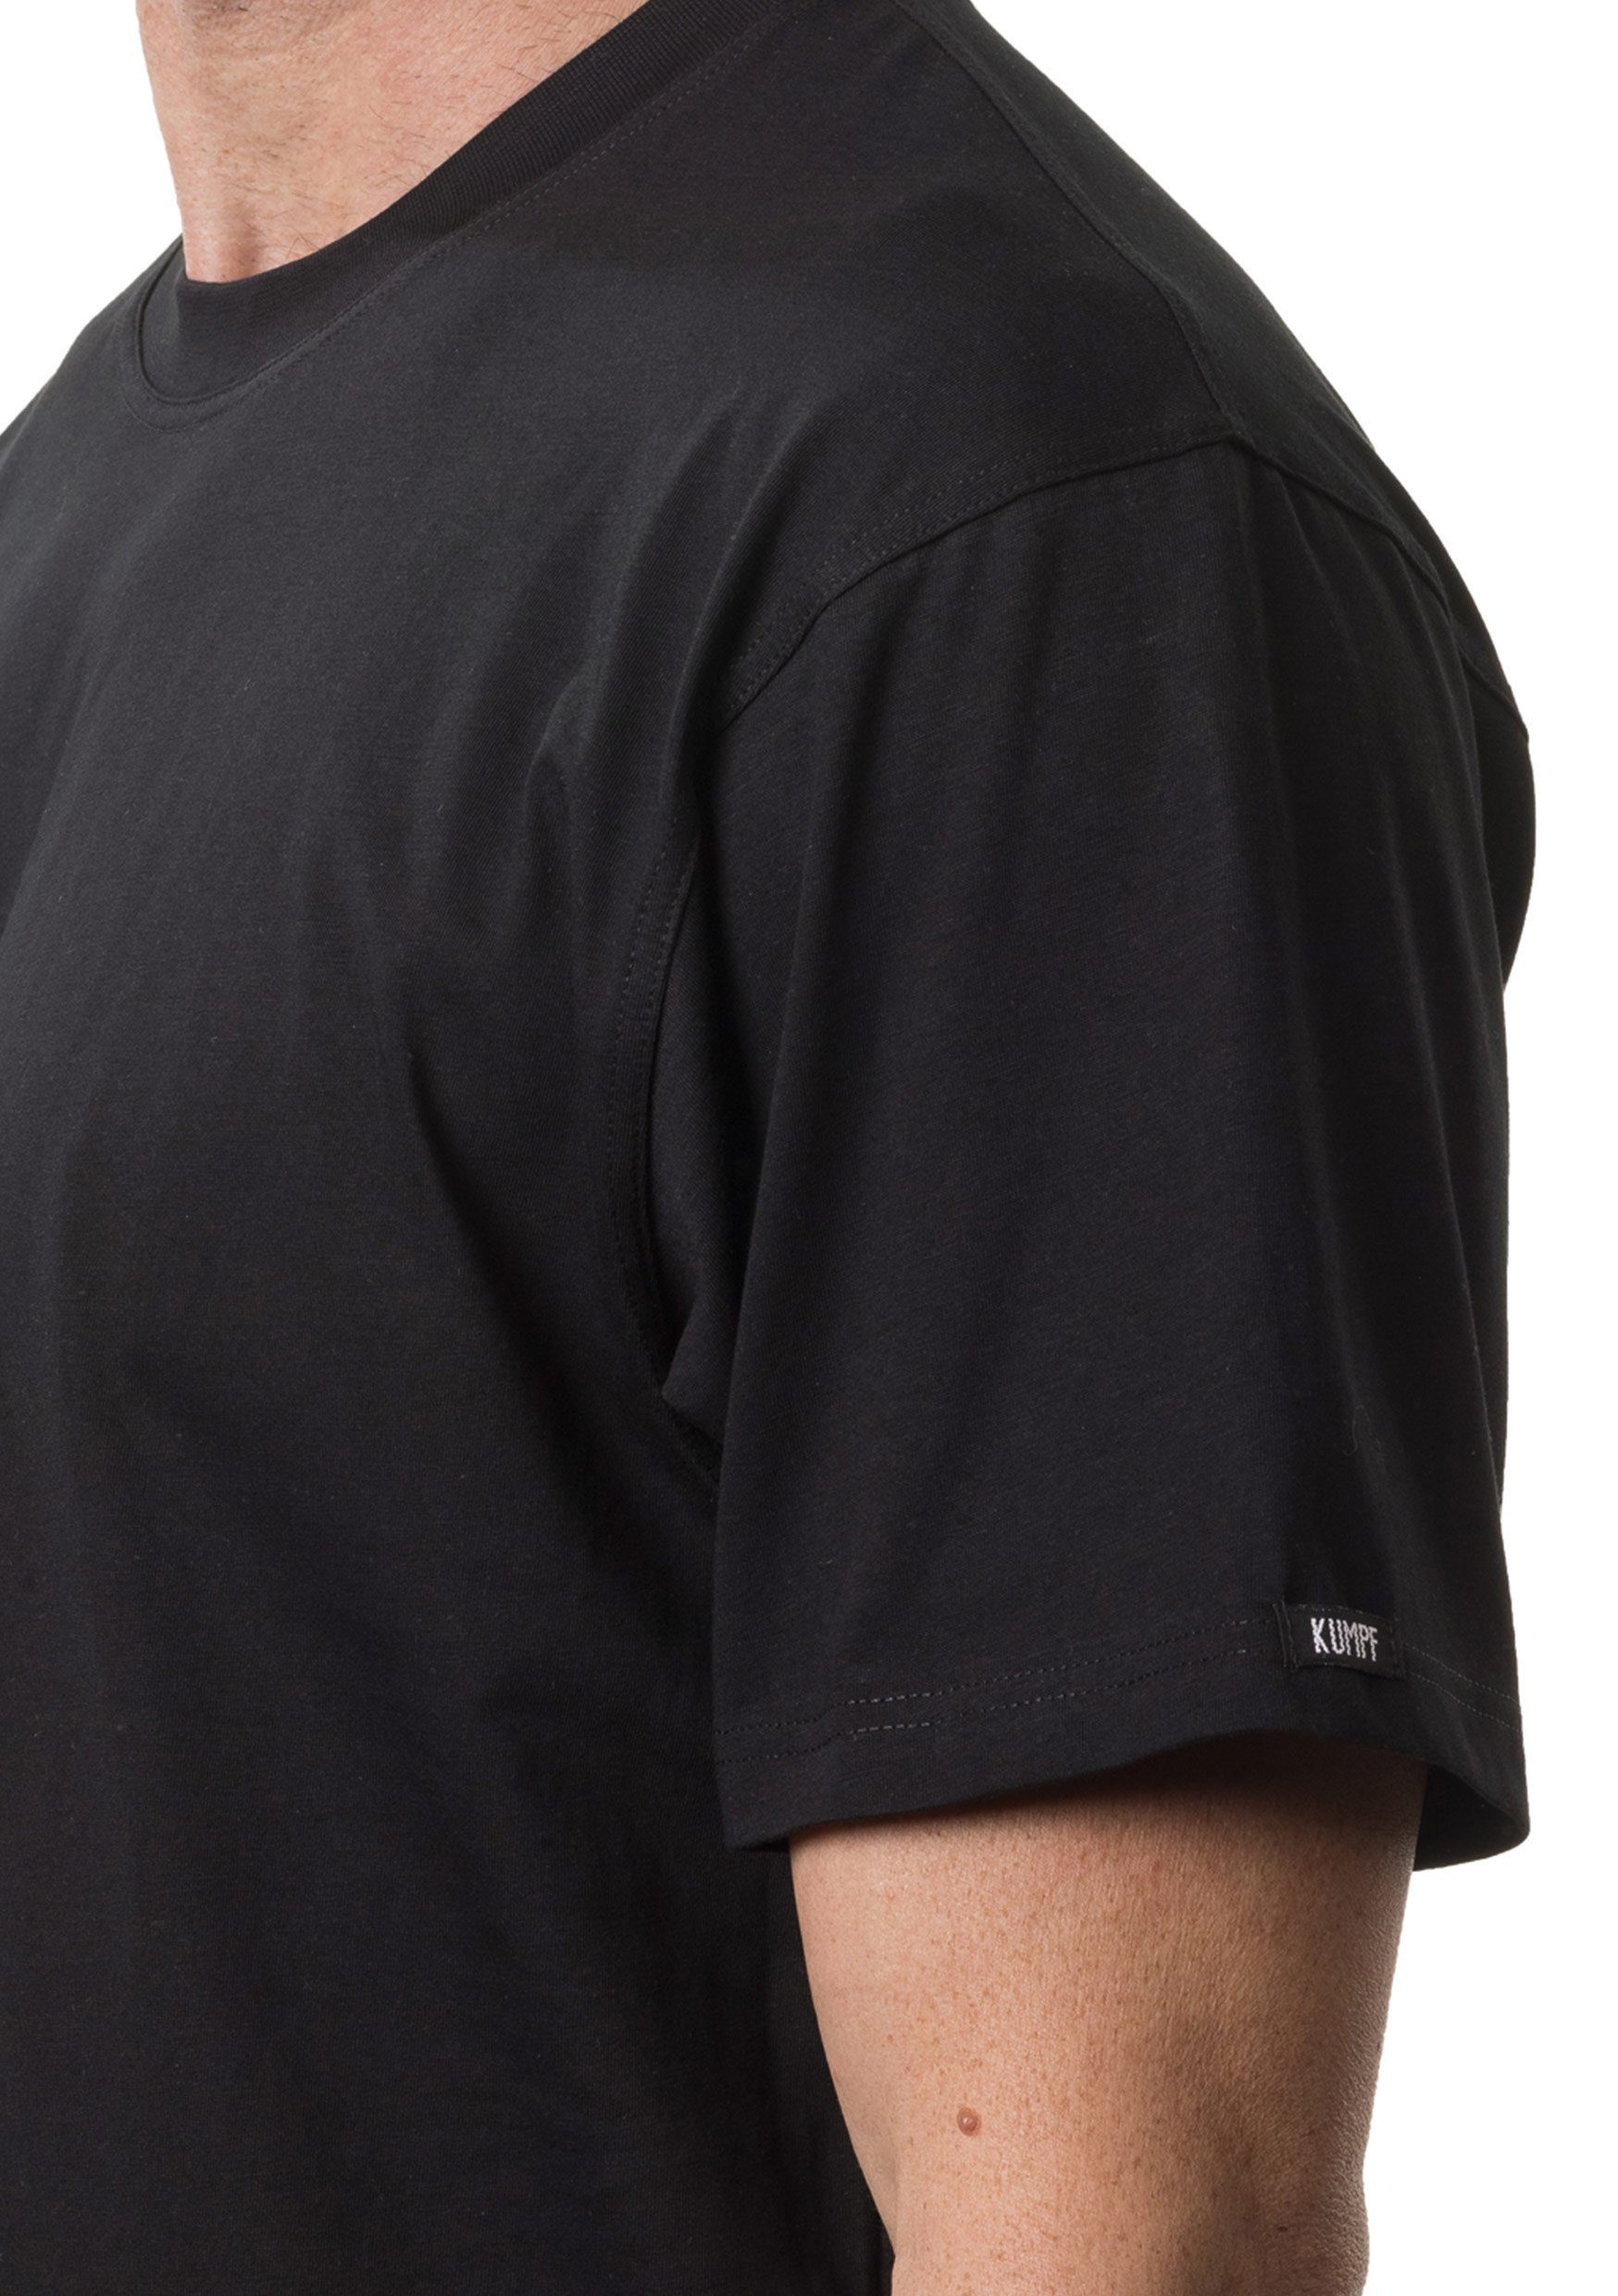 Markenqualität Herren Unterziehshirt Cotton schwarz T-Shirt hohe Arm Bio 1/2 1-St) KUMPF (Stück,